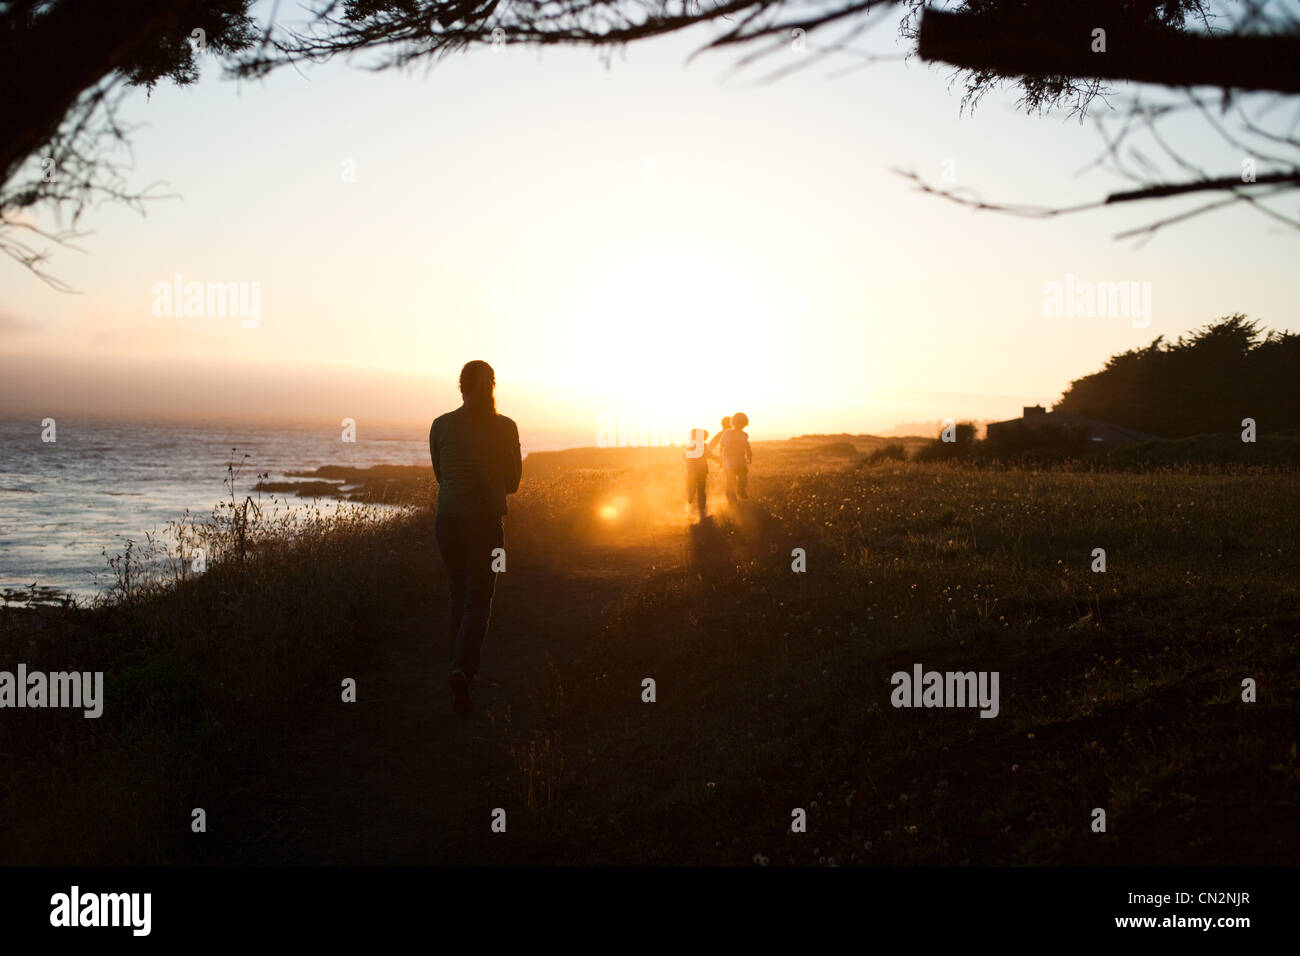 Family walking by coast at sunset Stock Photo